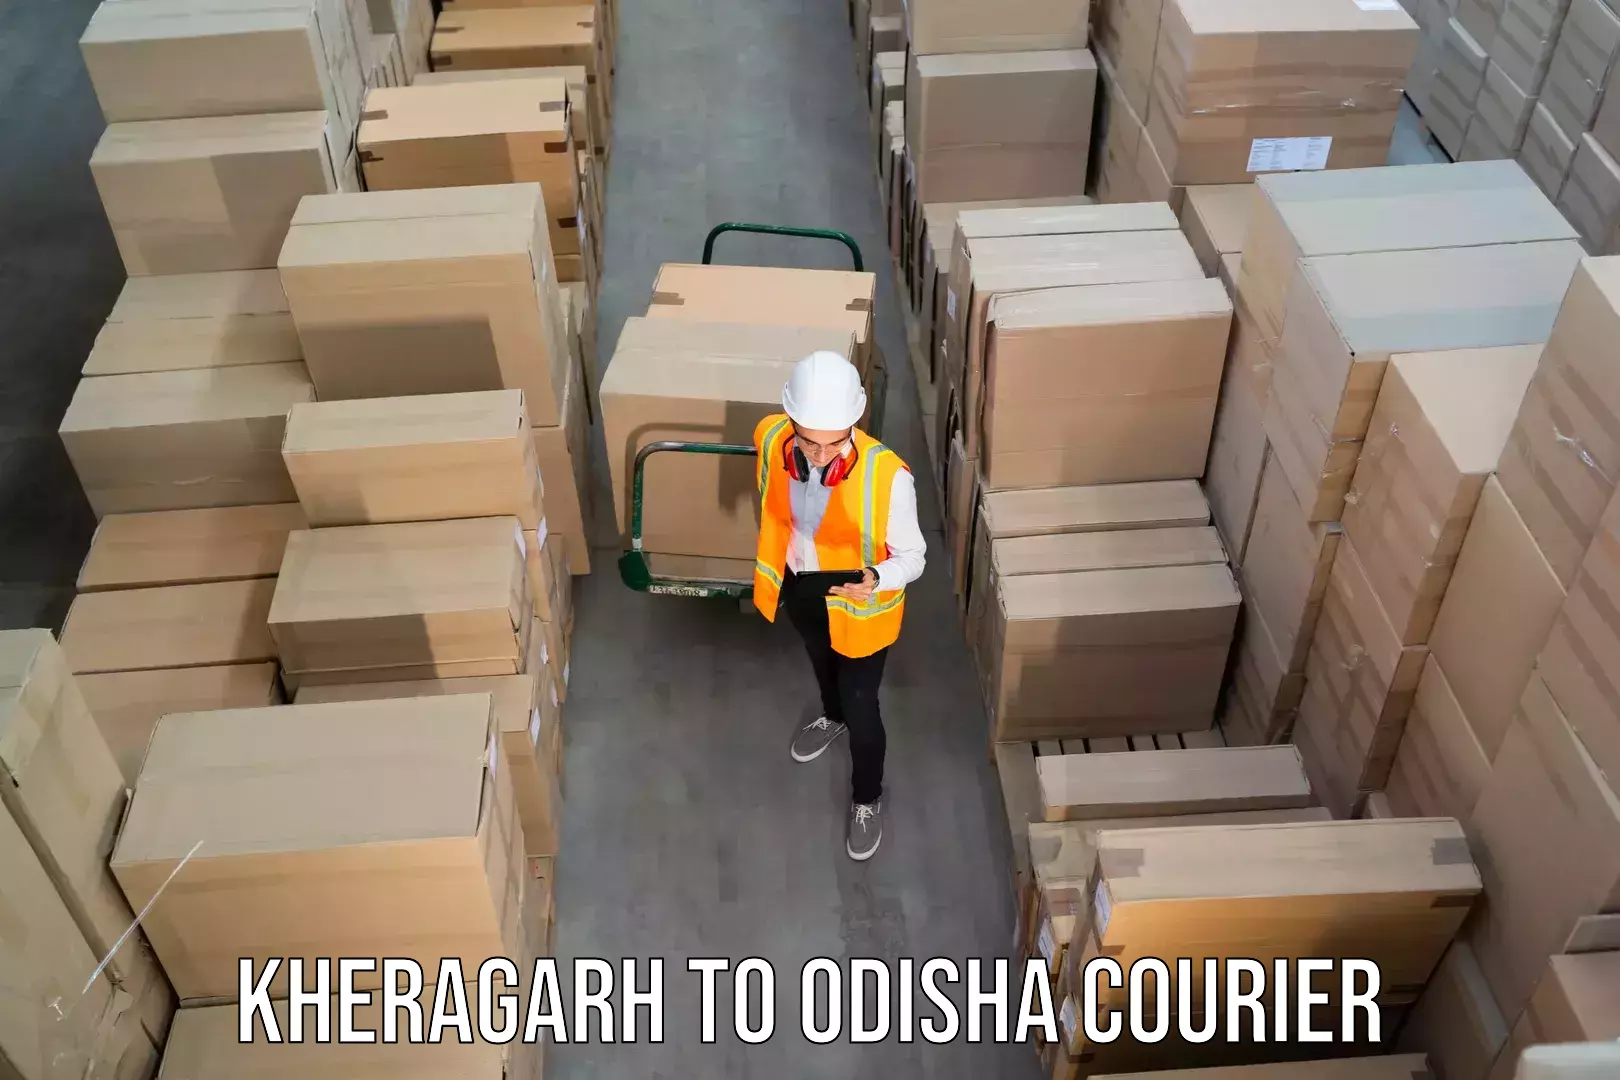 Courier app Kheragarh to Udala